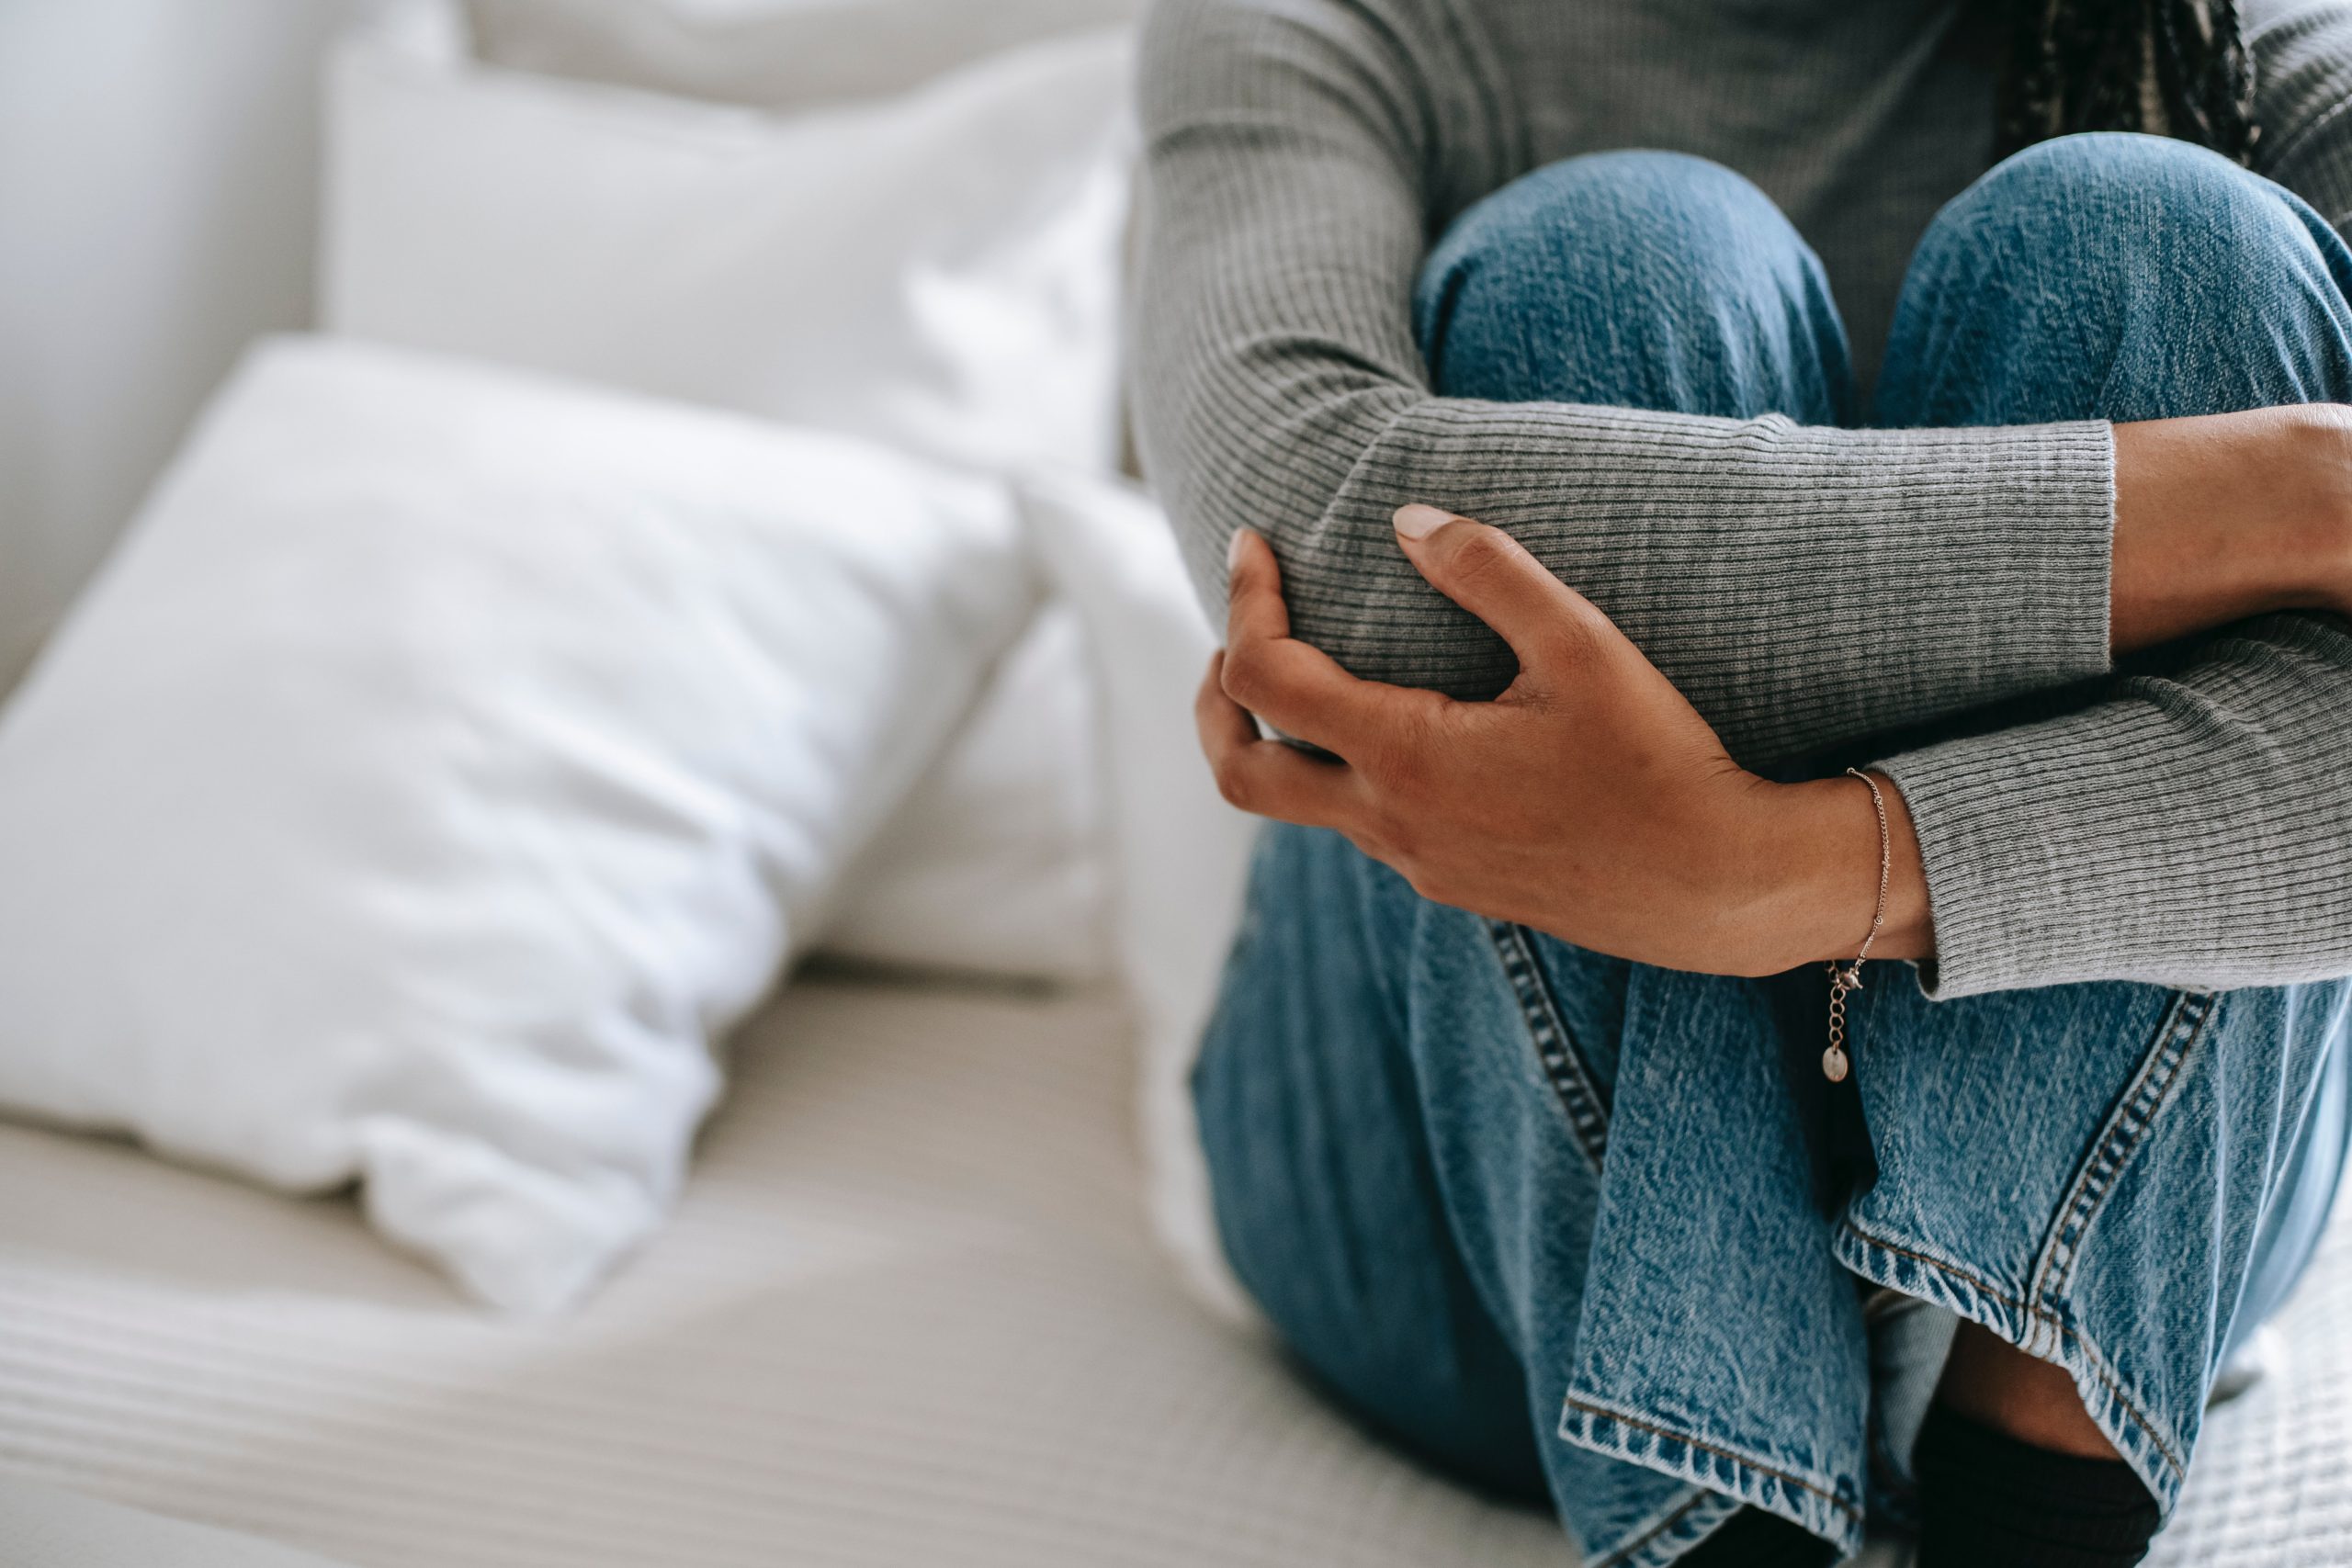 US health regulator approves first ever postpartum depression pill